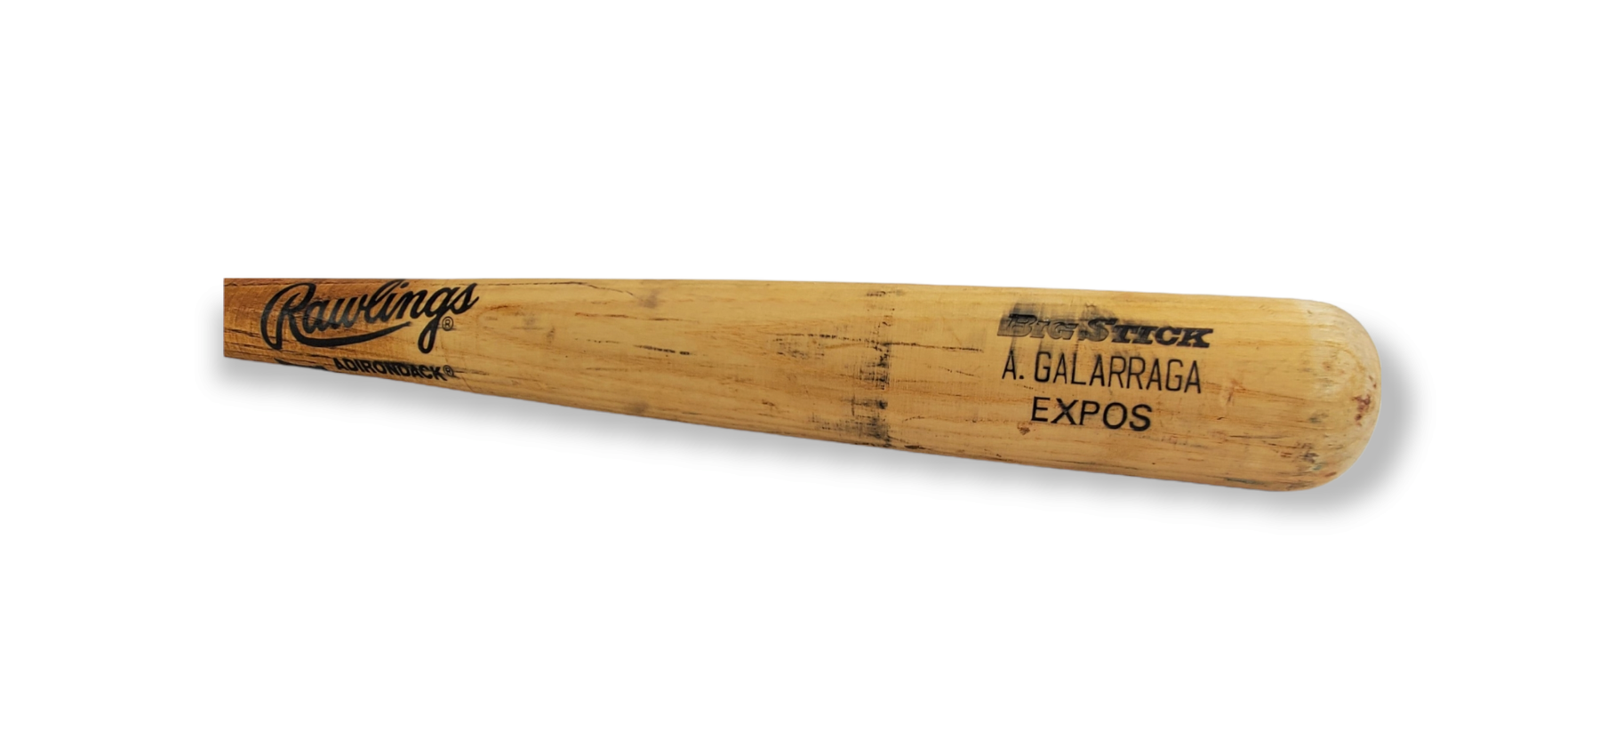 Andres Galarraga Game Used Baseball Bat Rawlings Big Stick Montreal Expos